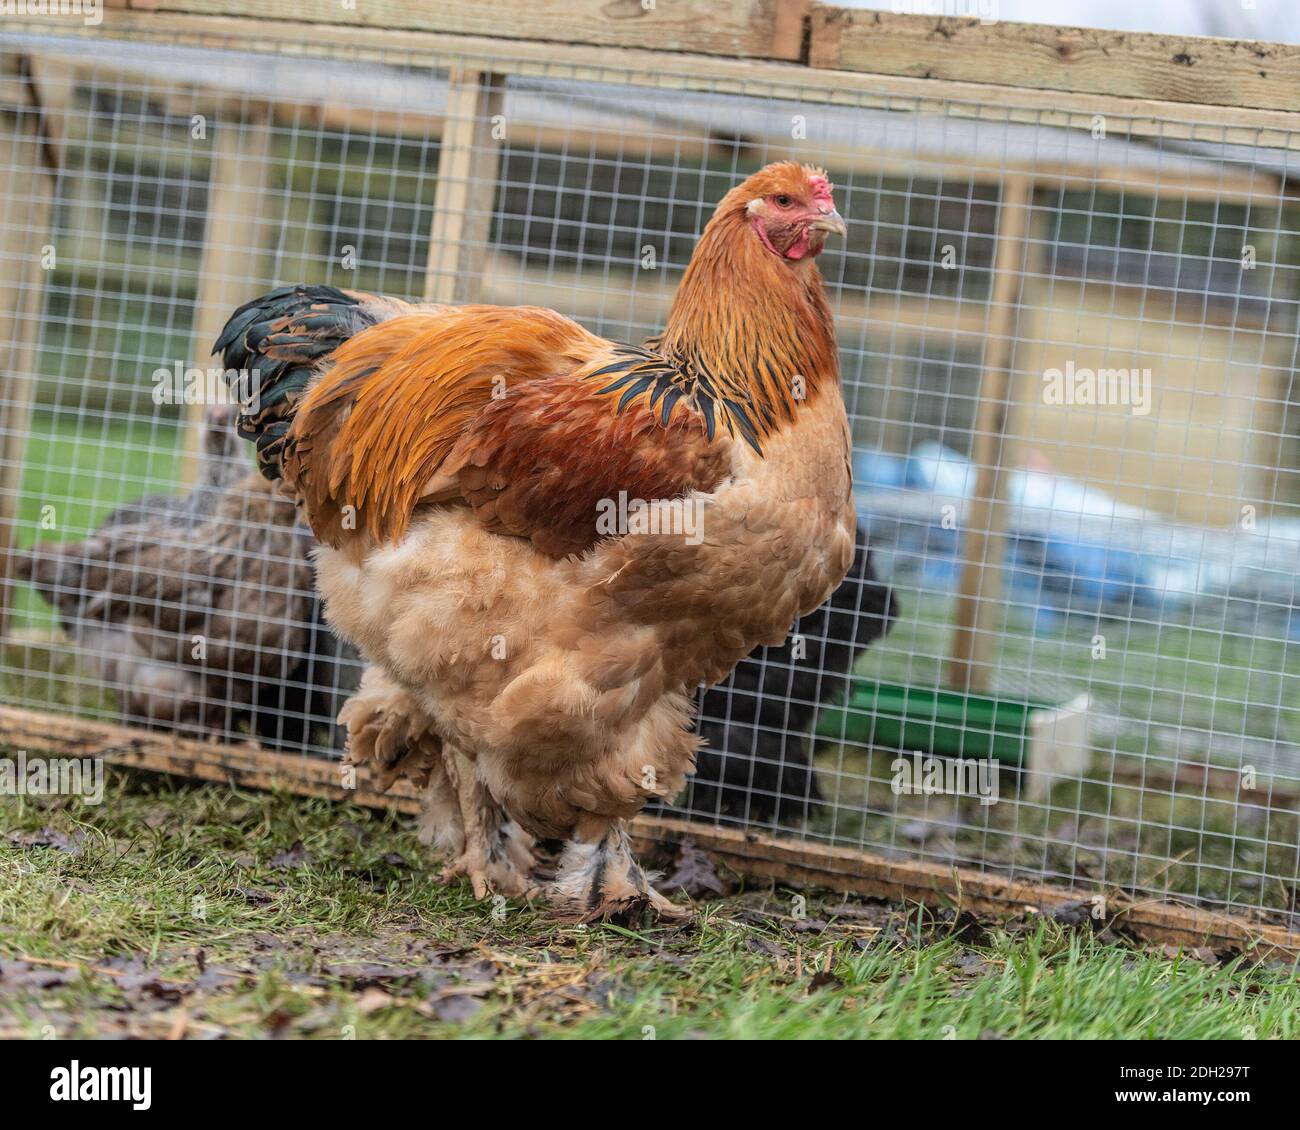 Brahma chickens free ranging Stock Photo